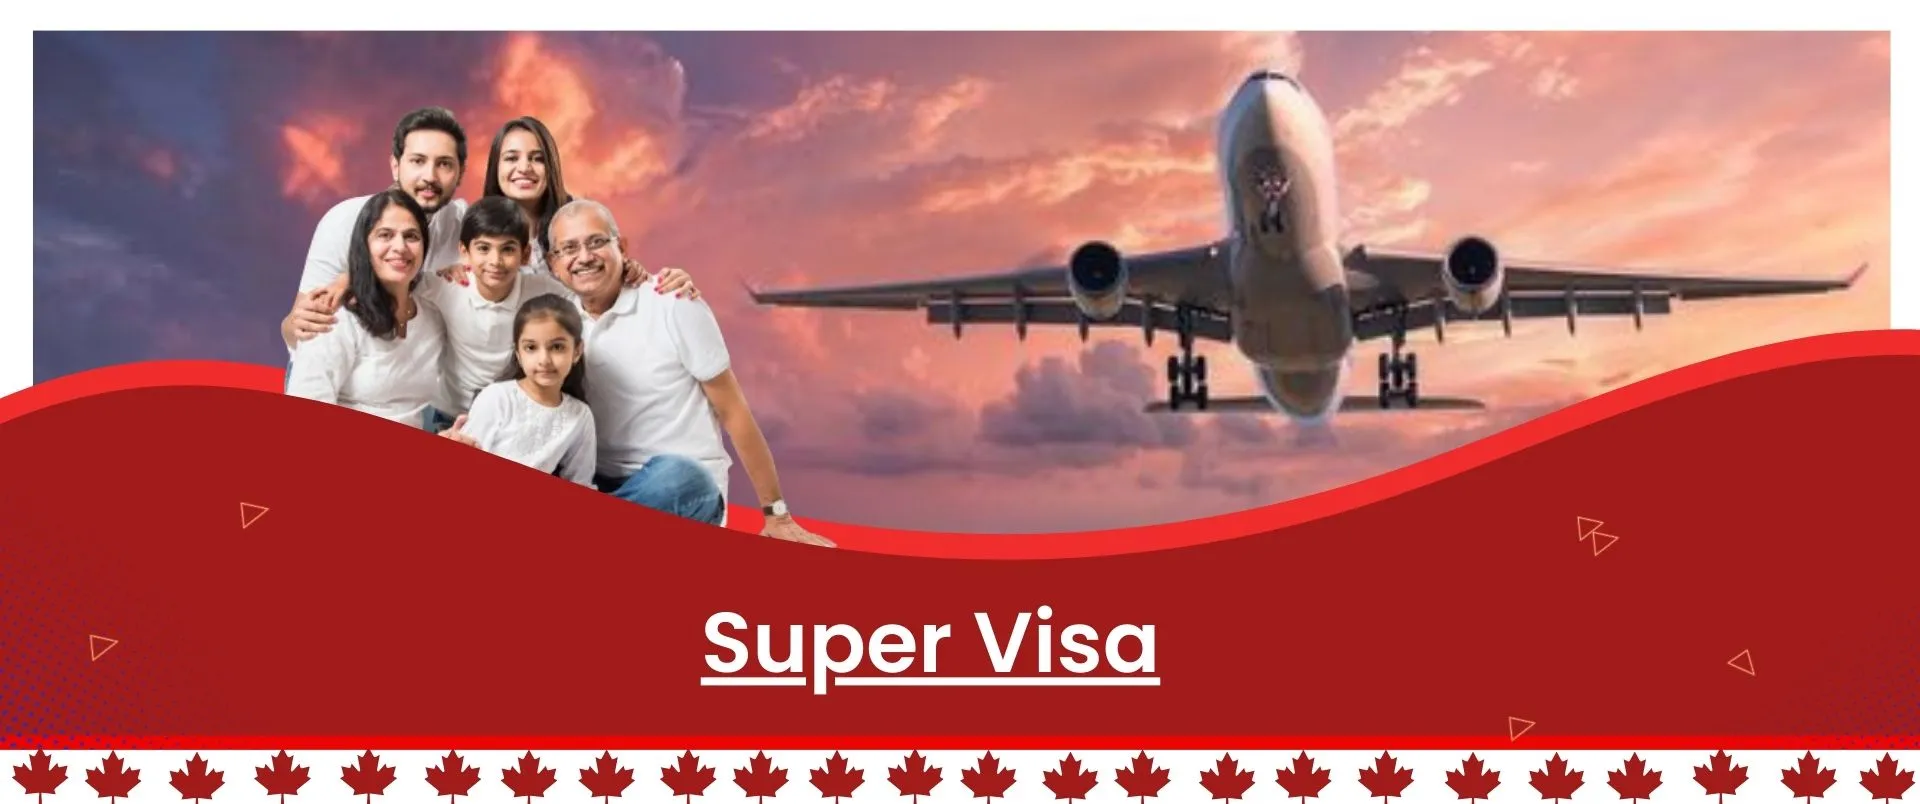 Super visa Canada, Family Picture